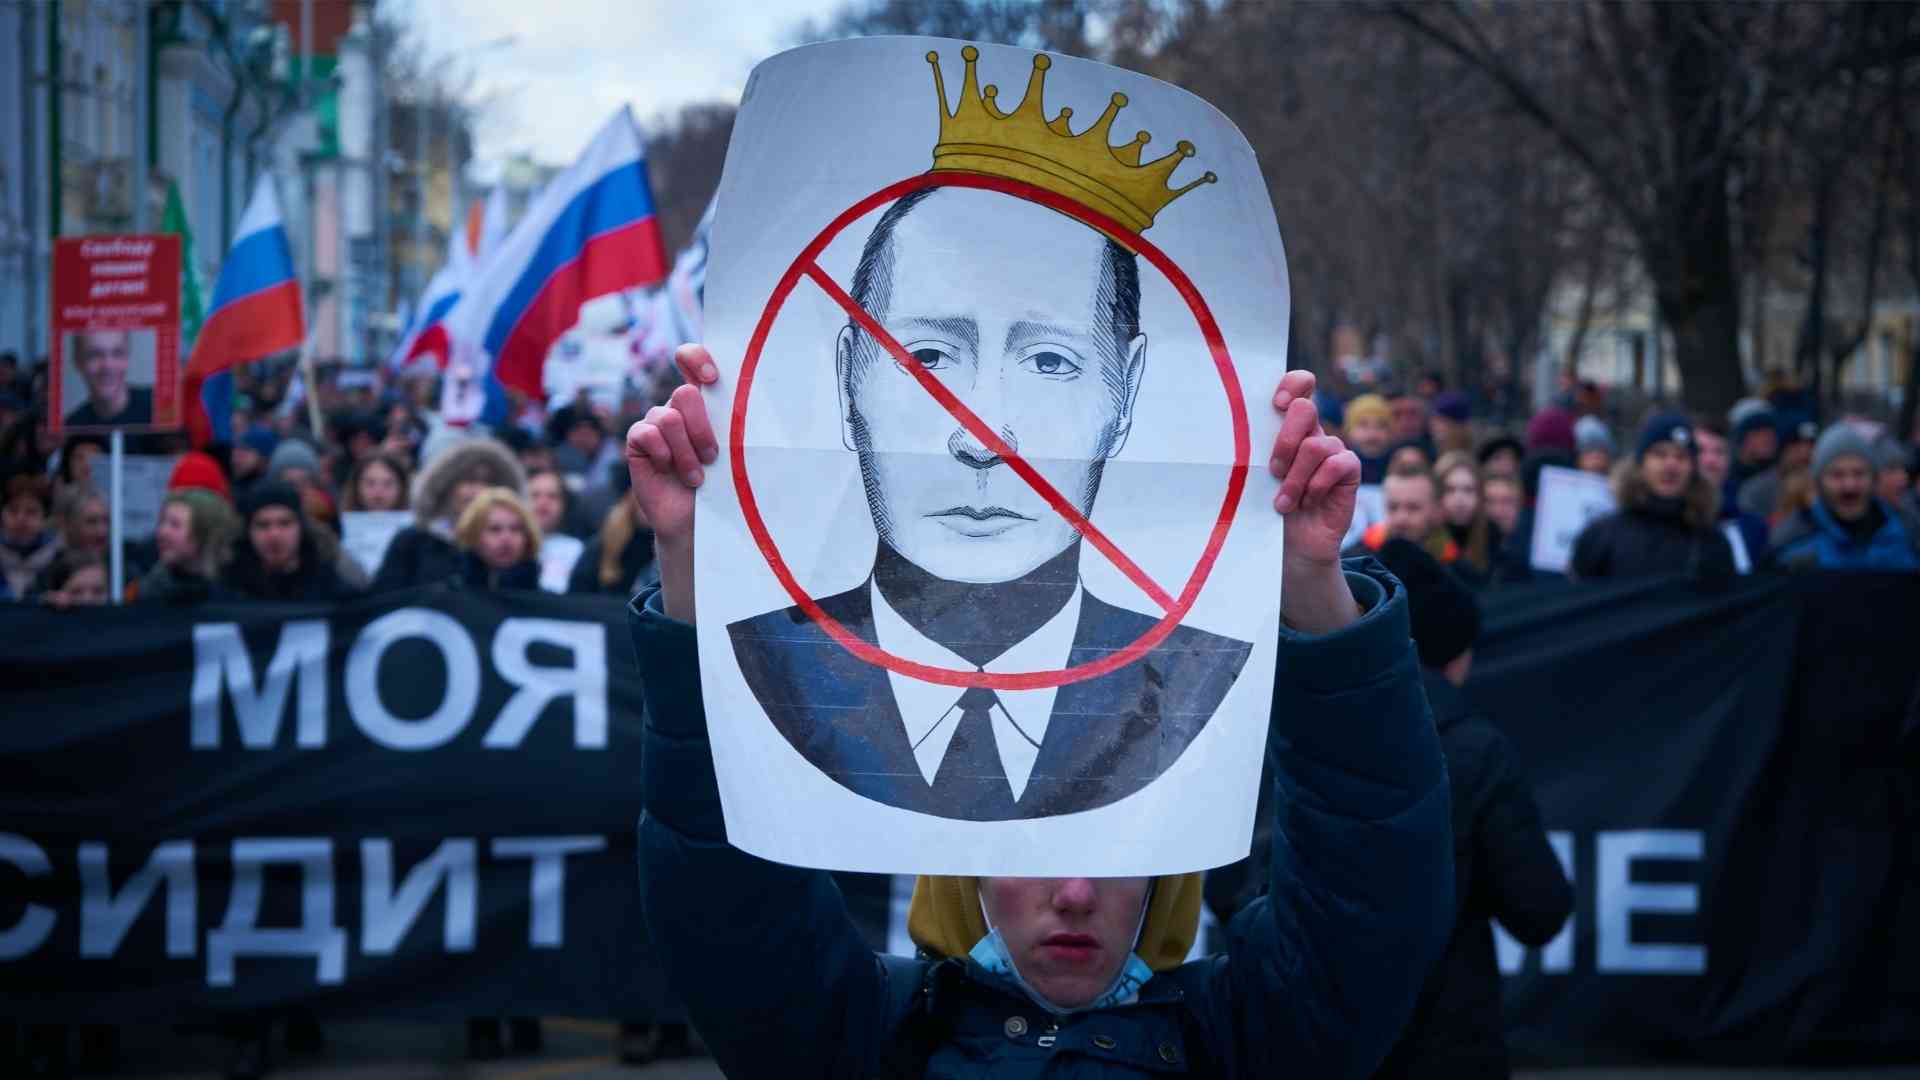 Putin intends to take back Ukraine